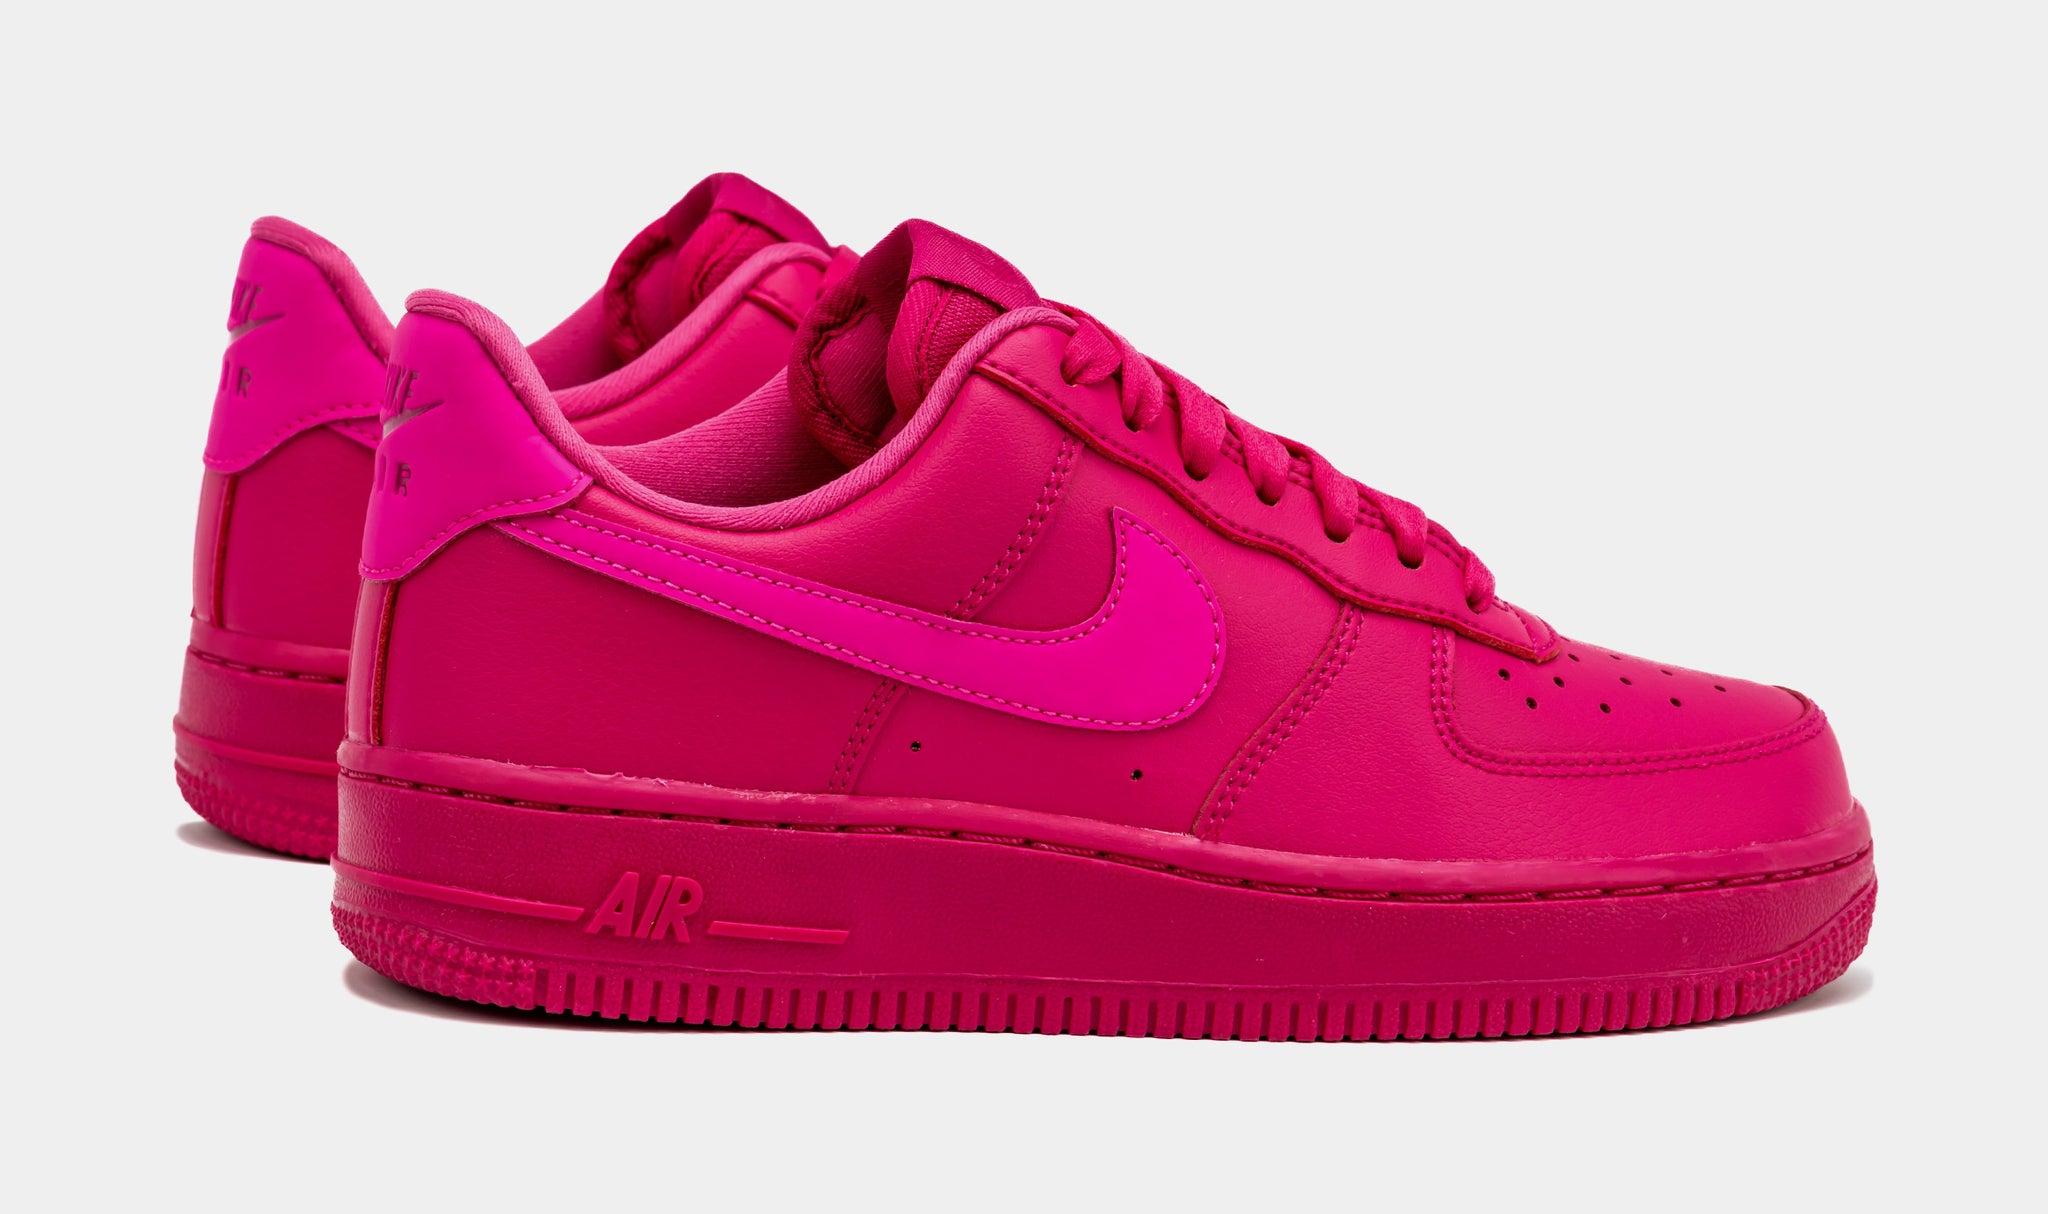 Air Force 1 '07 Fierce Pink Womens Lifestyle Shoes (Fireberry/Fierce Pink)